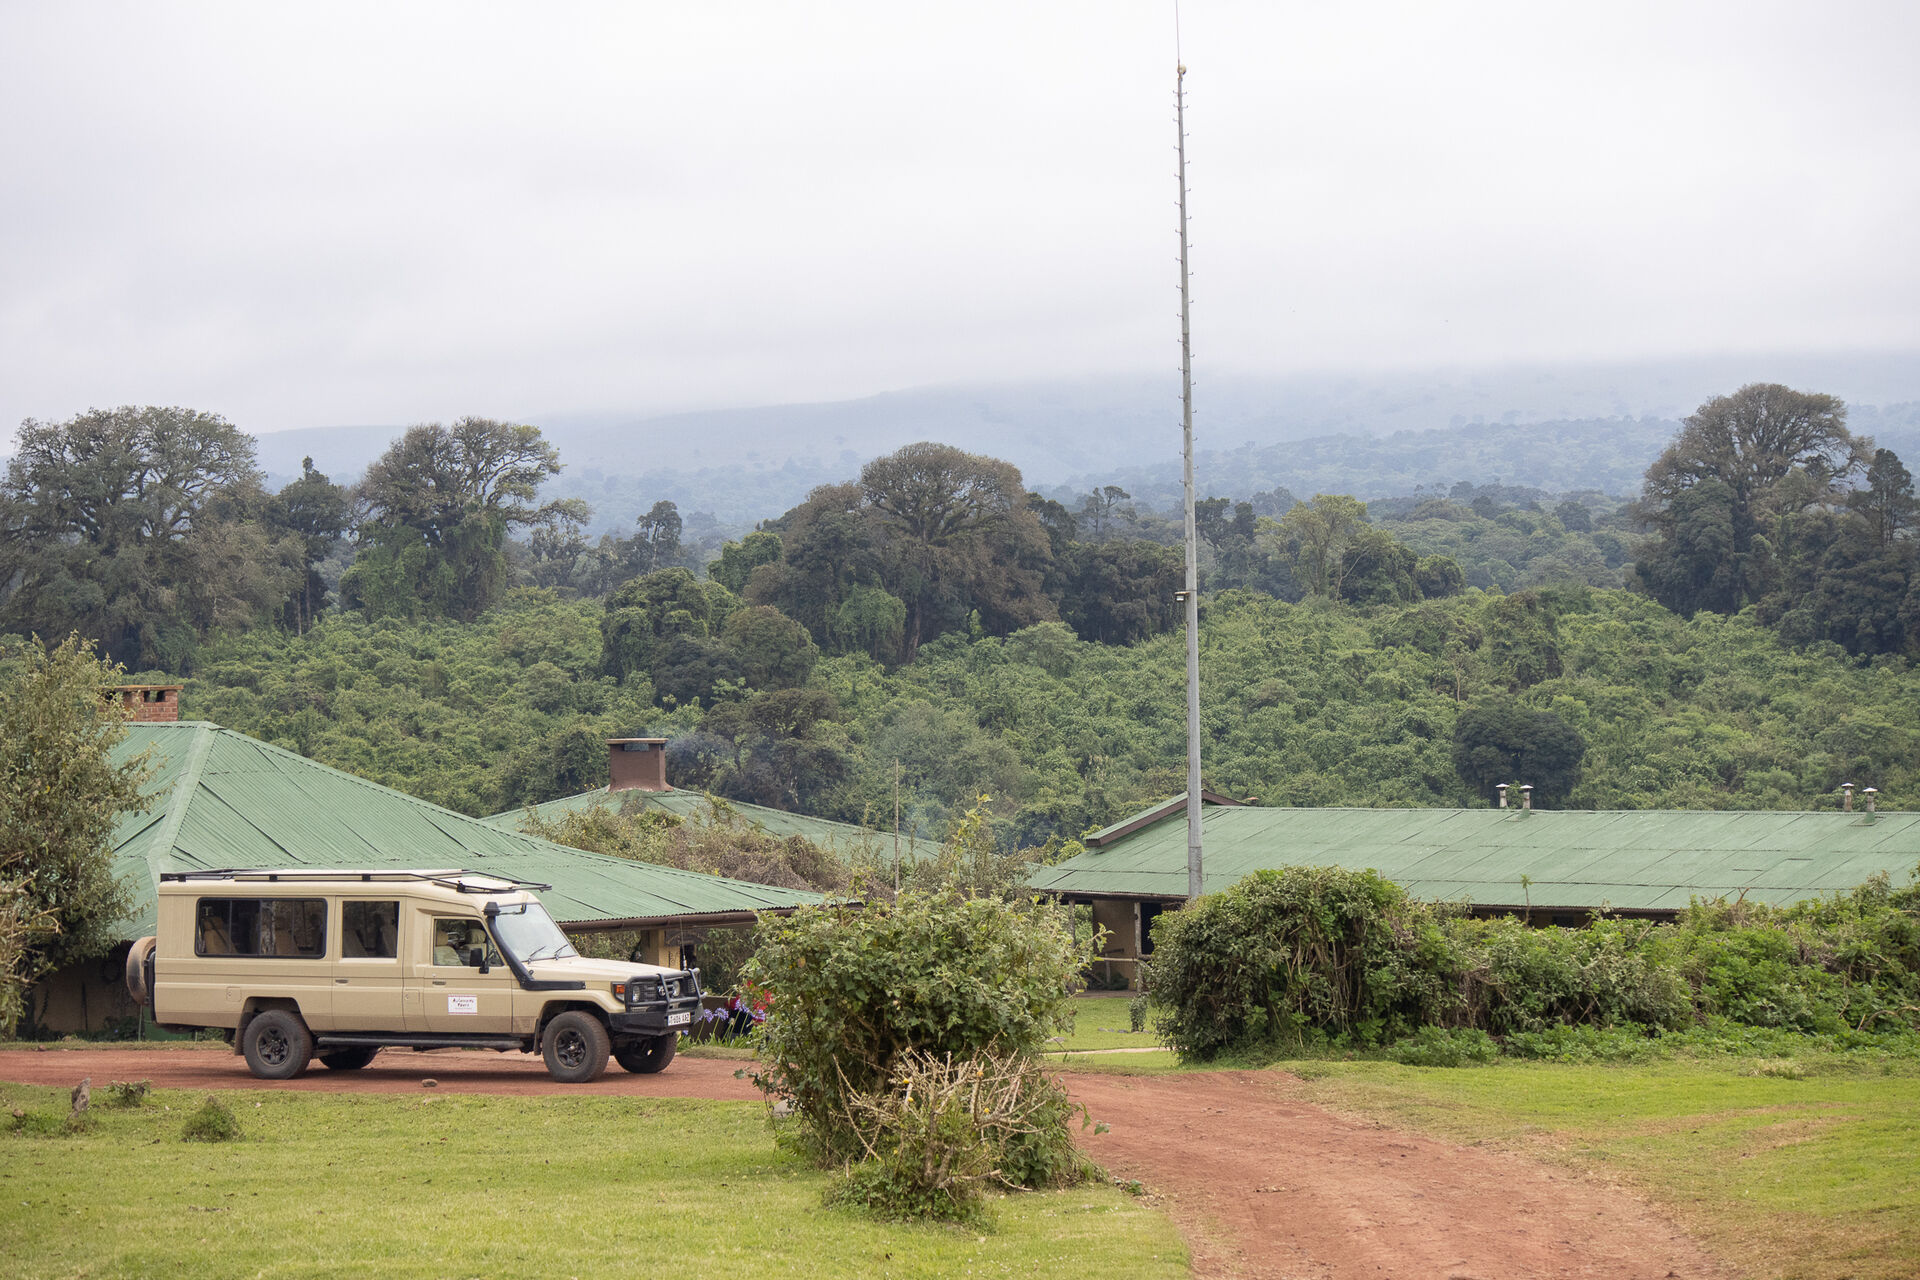 Accommodations at Ngorongoro Crater